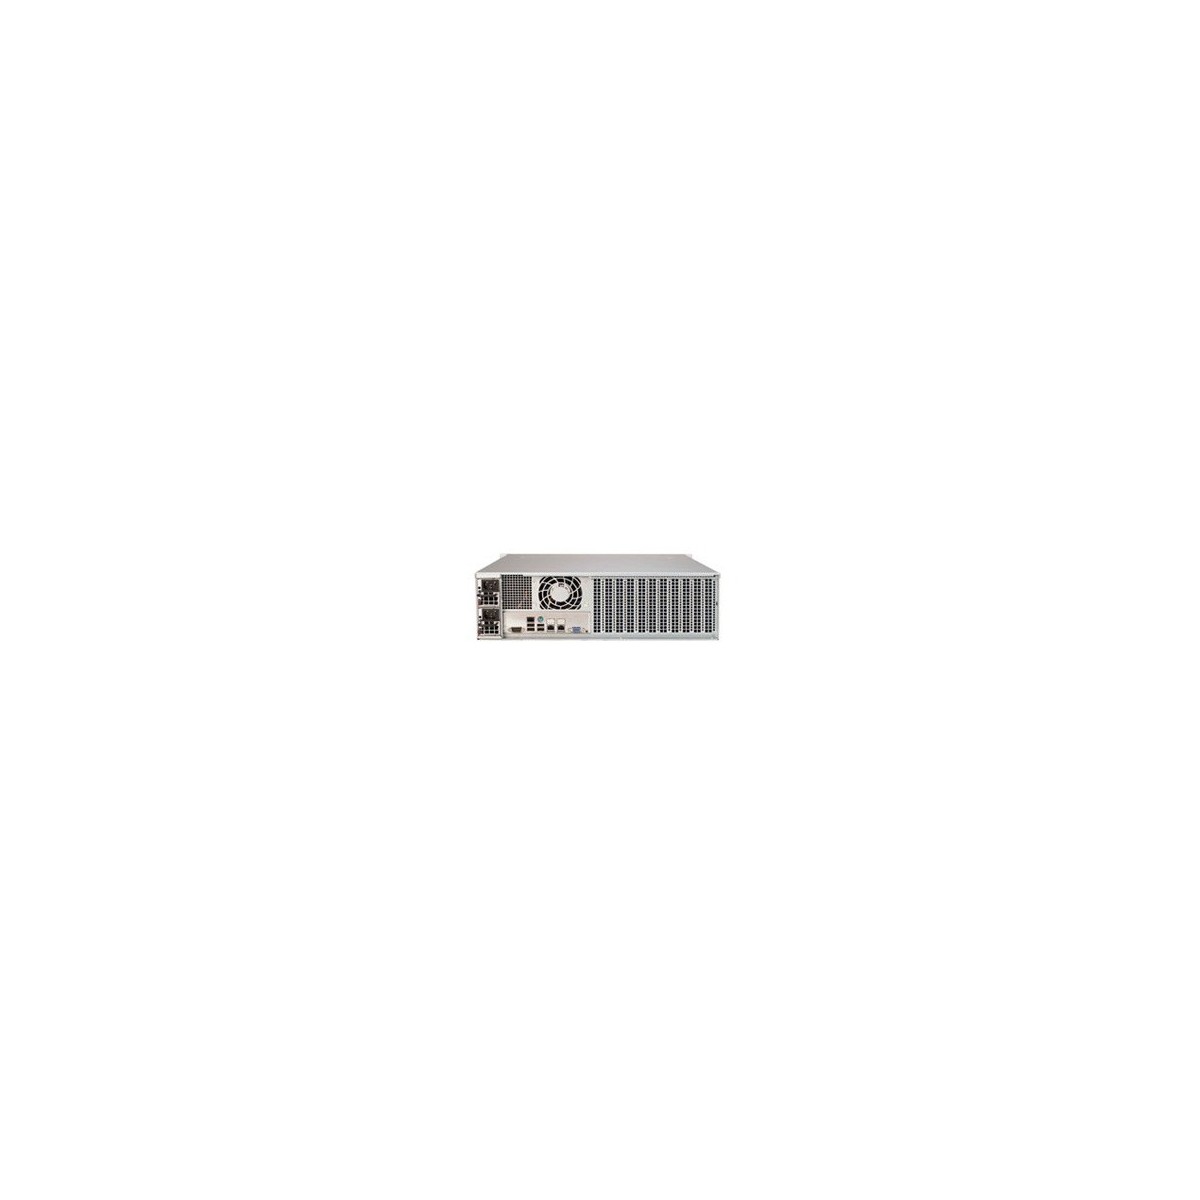 Supermicro 835XTQ-R982B - Rack - Black - 3U - HDD,LAN,Power,Power fail - UL - CUL - TUV - EN 60950/IEC 60950 - CB - CCC. - 980 W